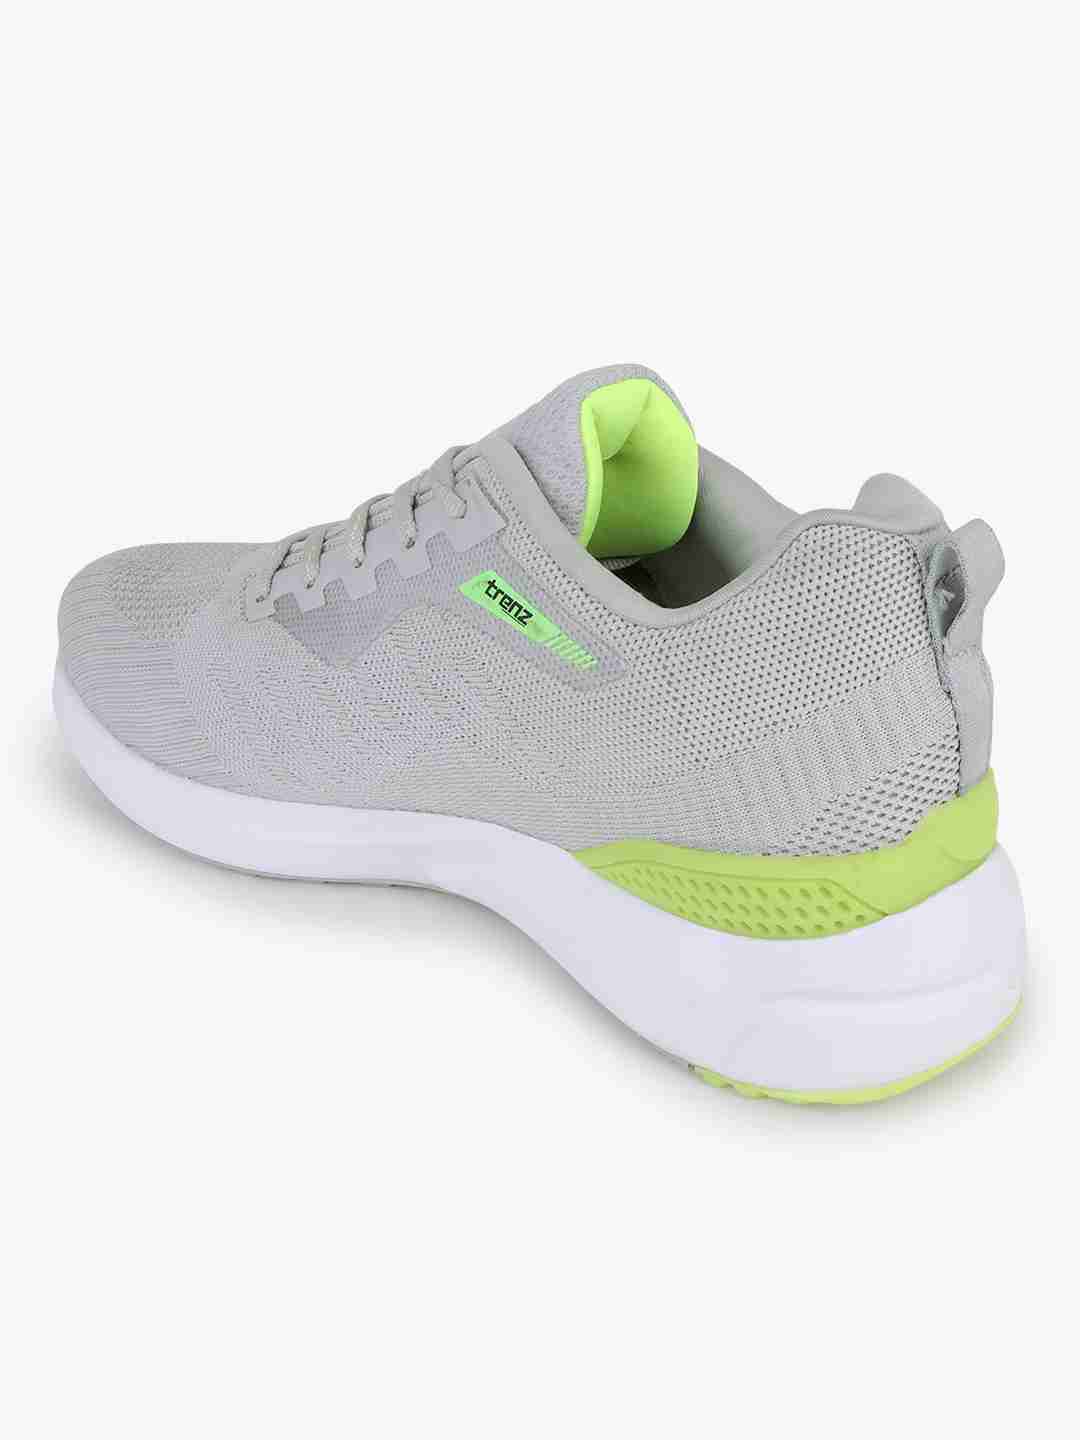 Trendz SAM Light Grey Men Running Shoes